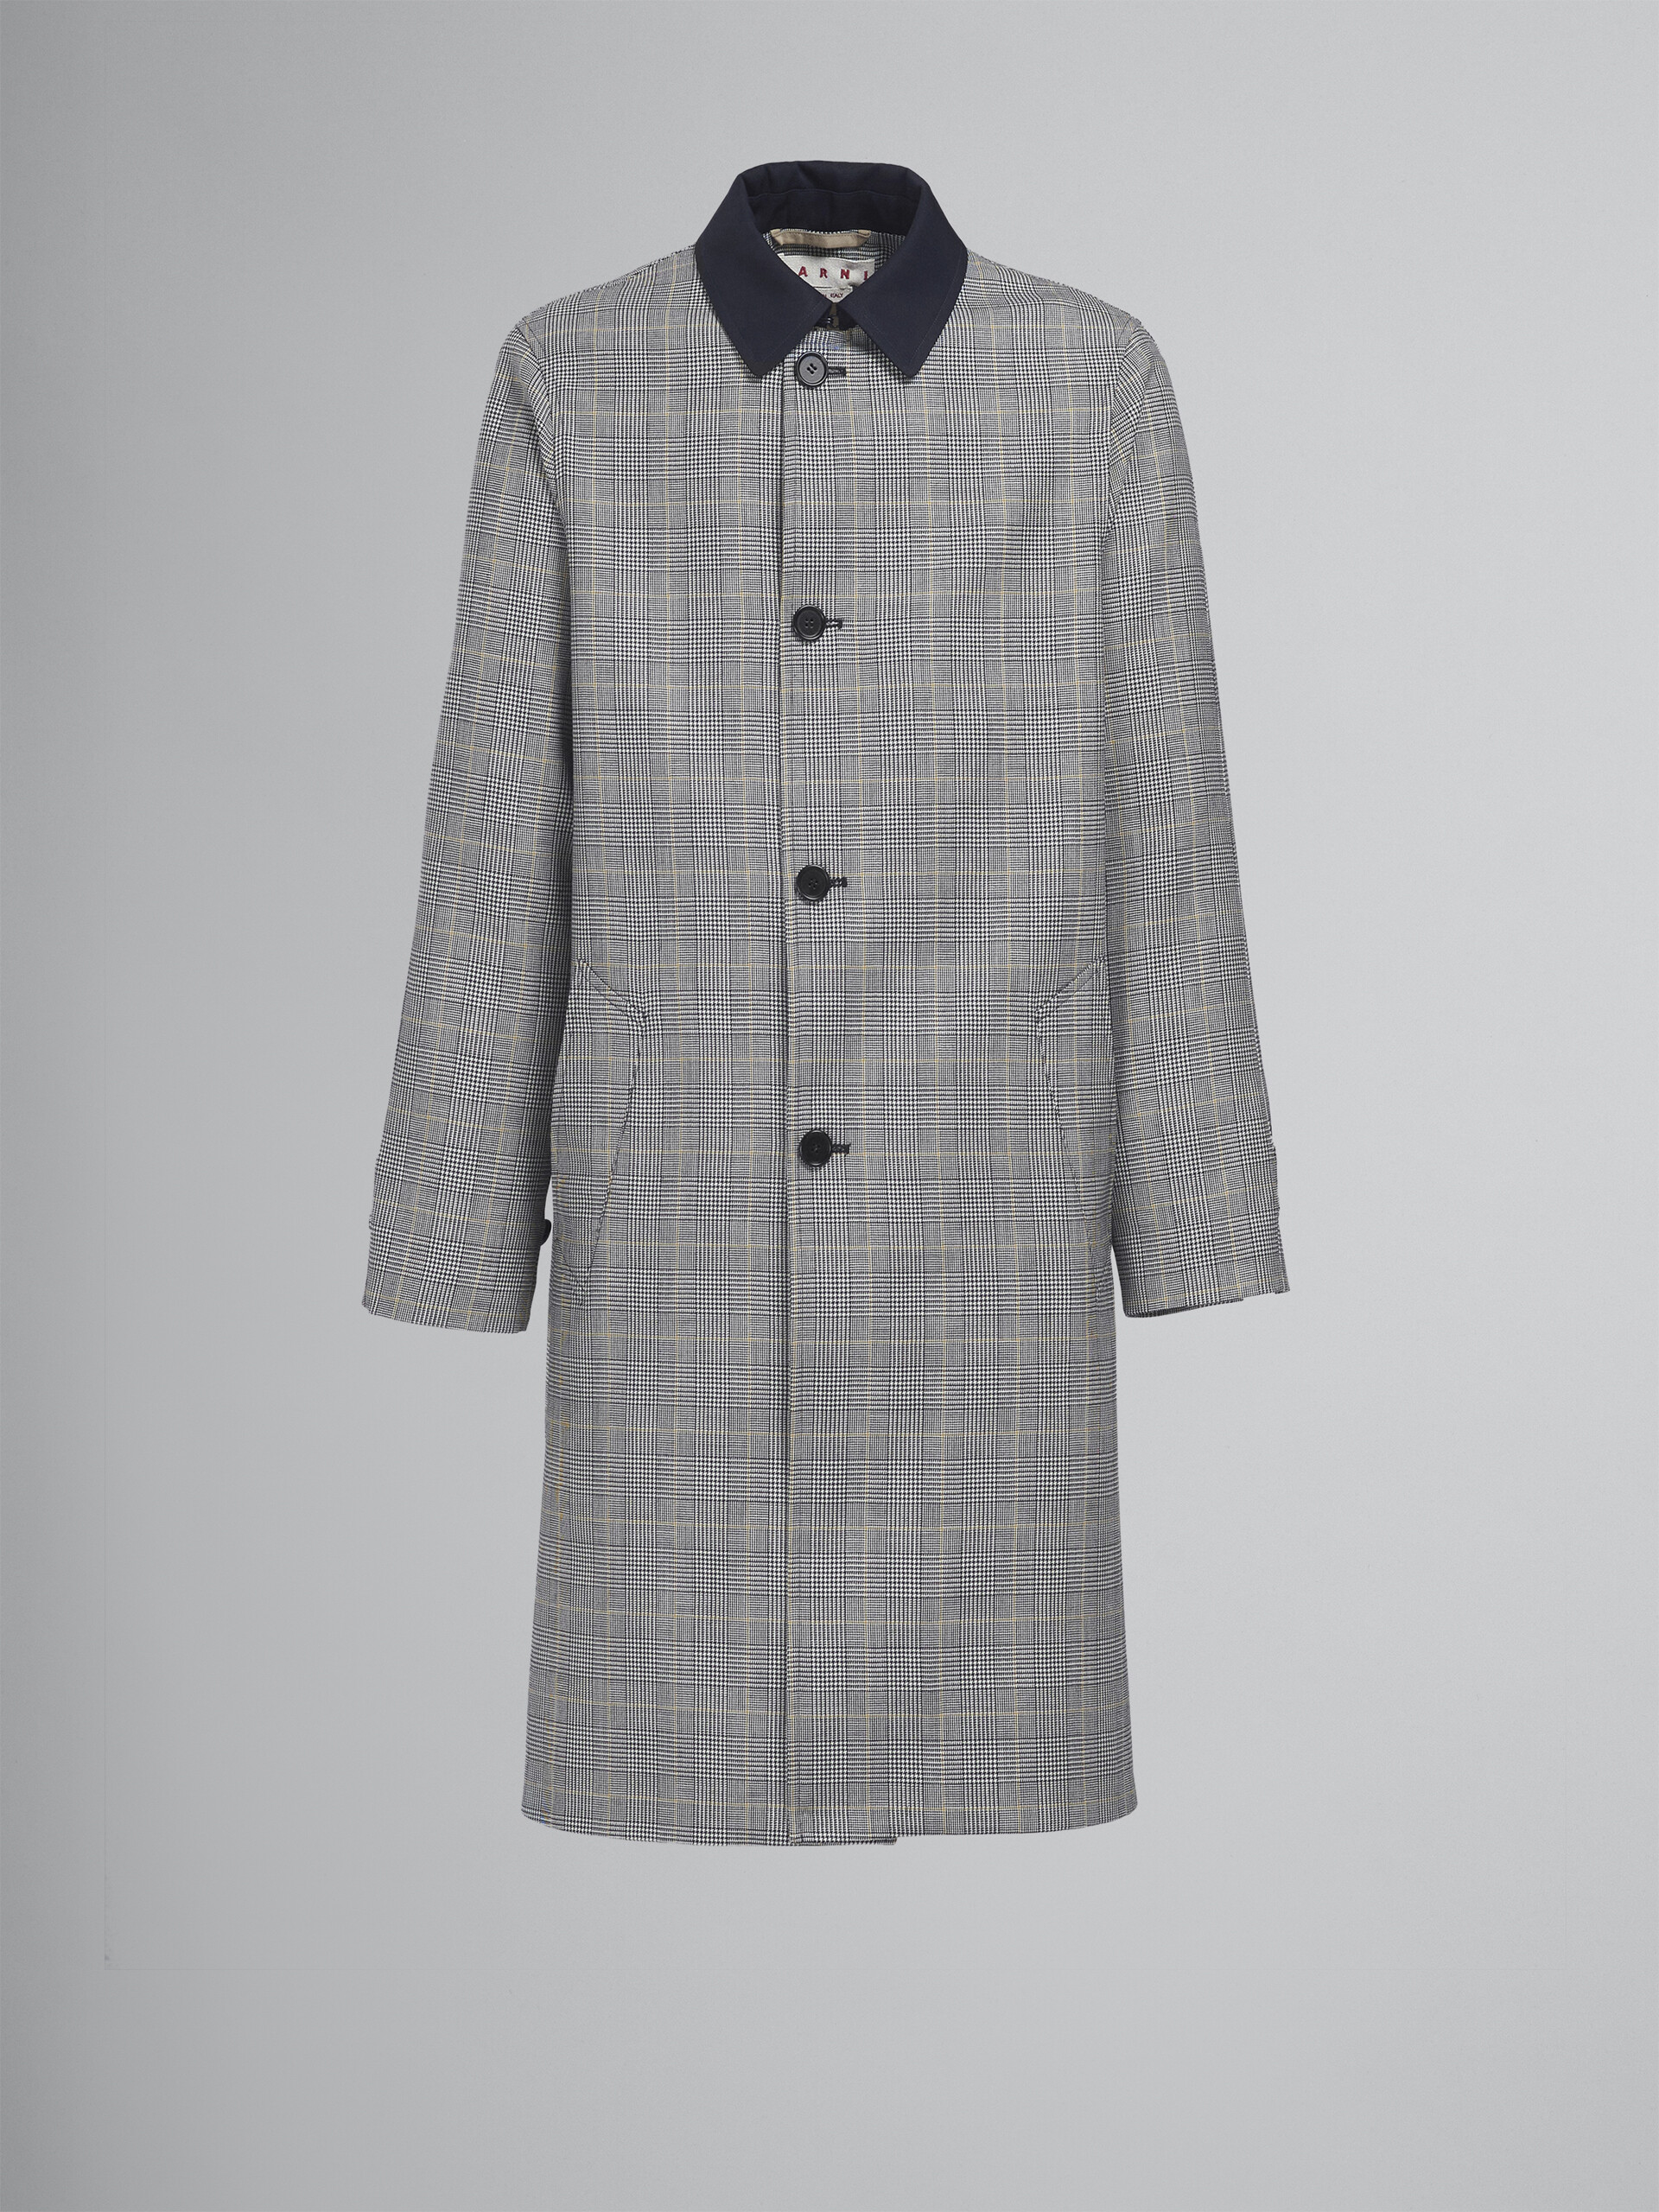 Prince of Wales wool coat - Coat - Image 1